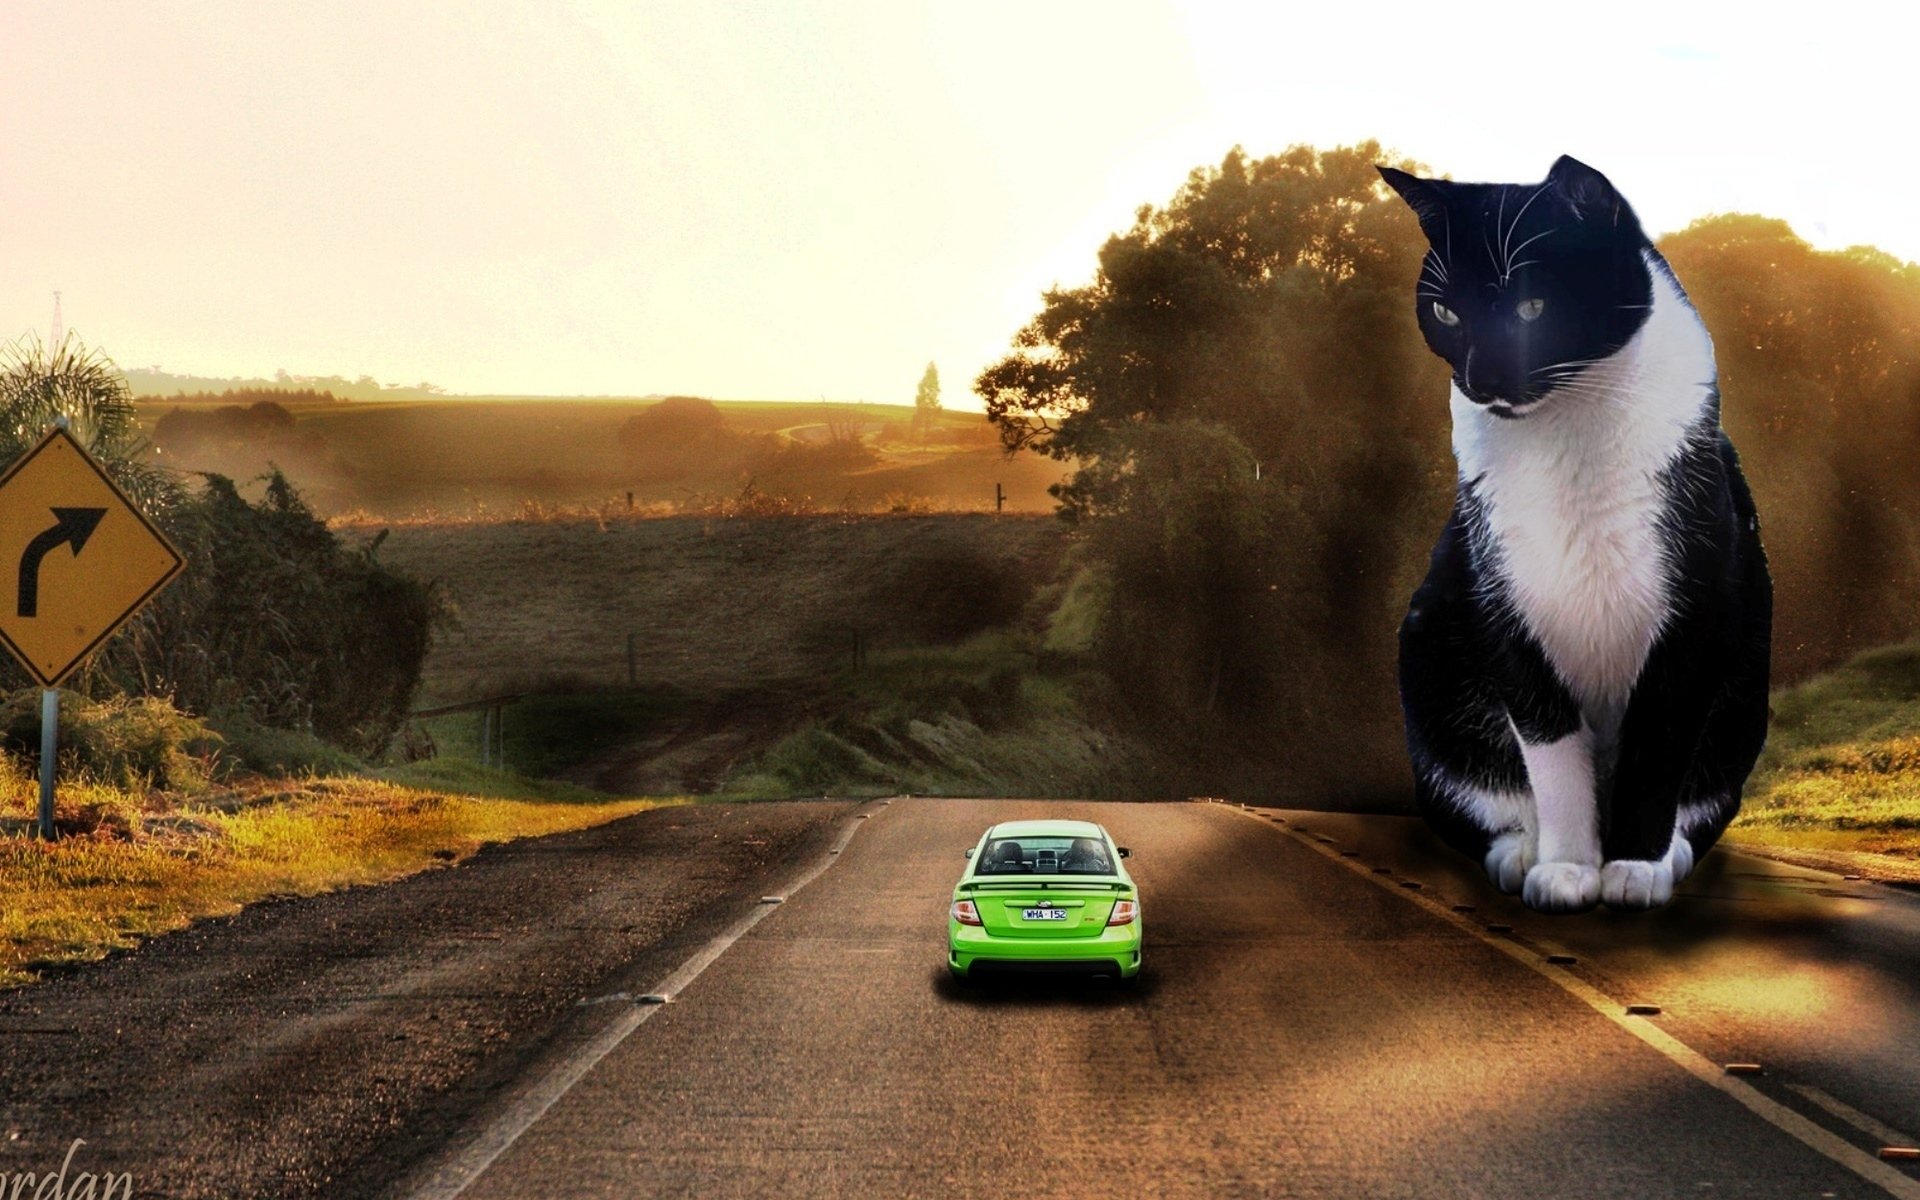 cat, Giant, Car, Road, Landscape, Digital art, Photo manipulation Wallpaper...